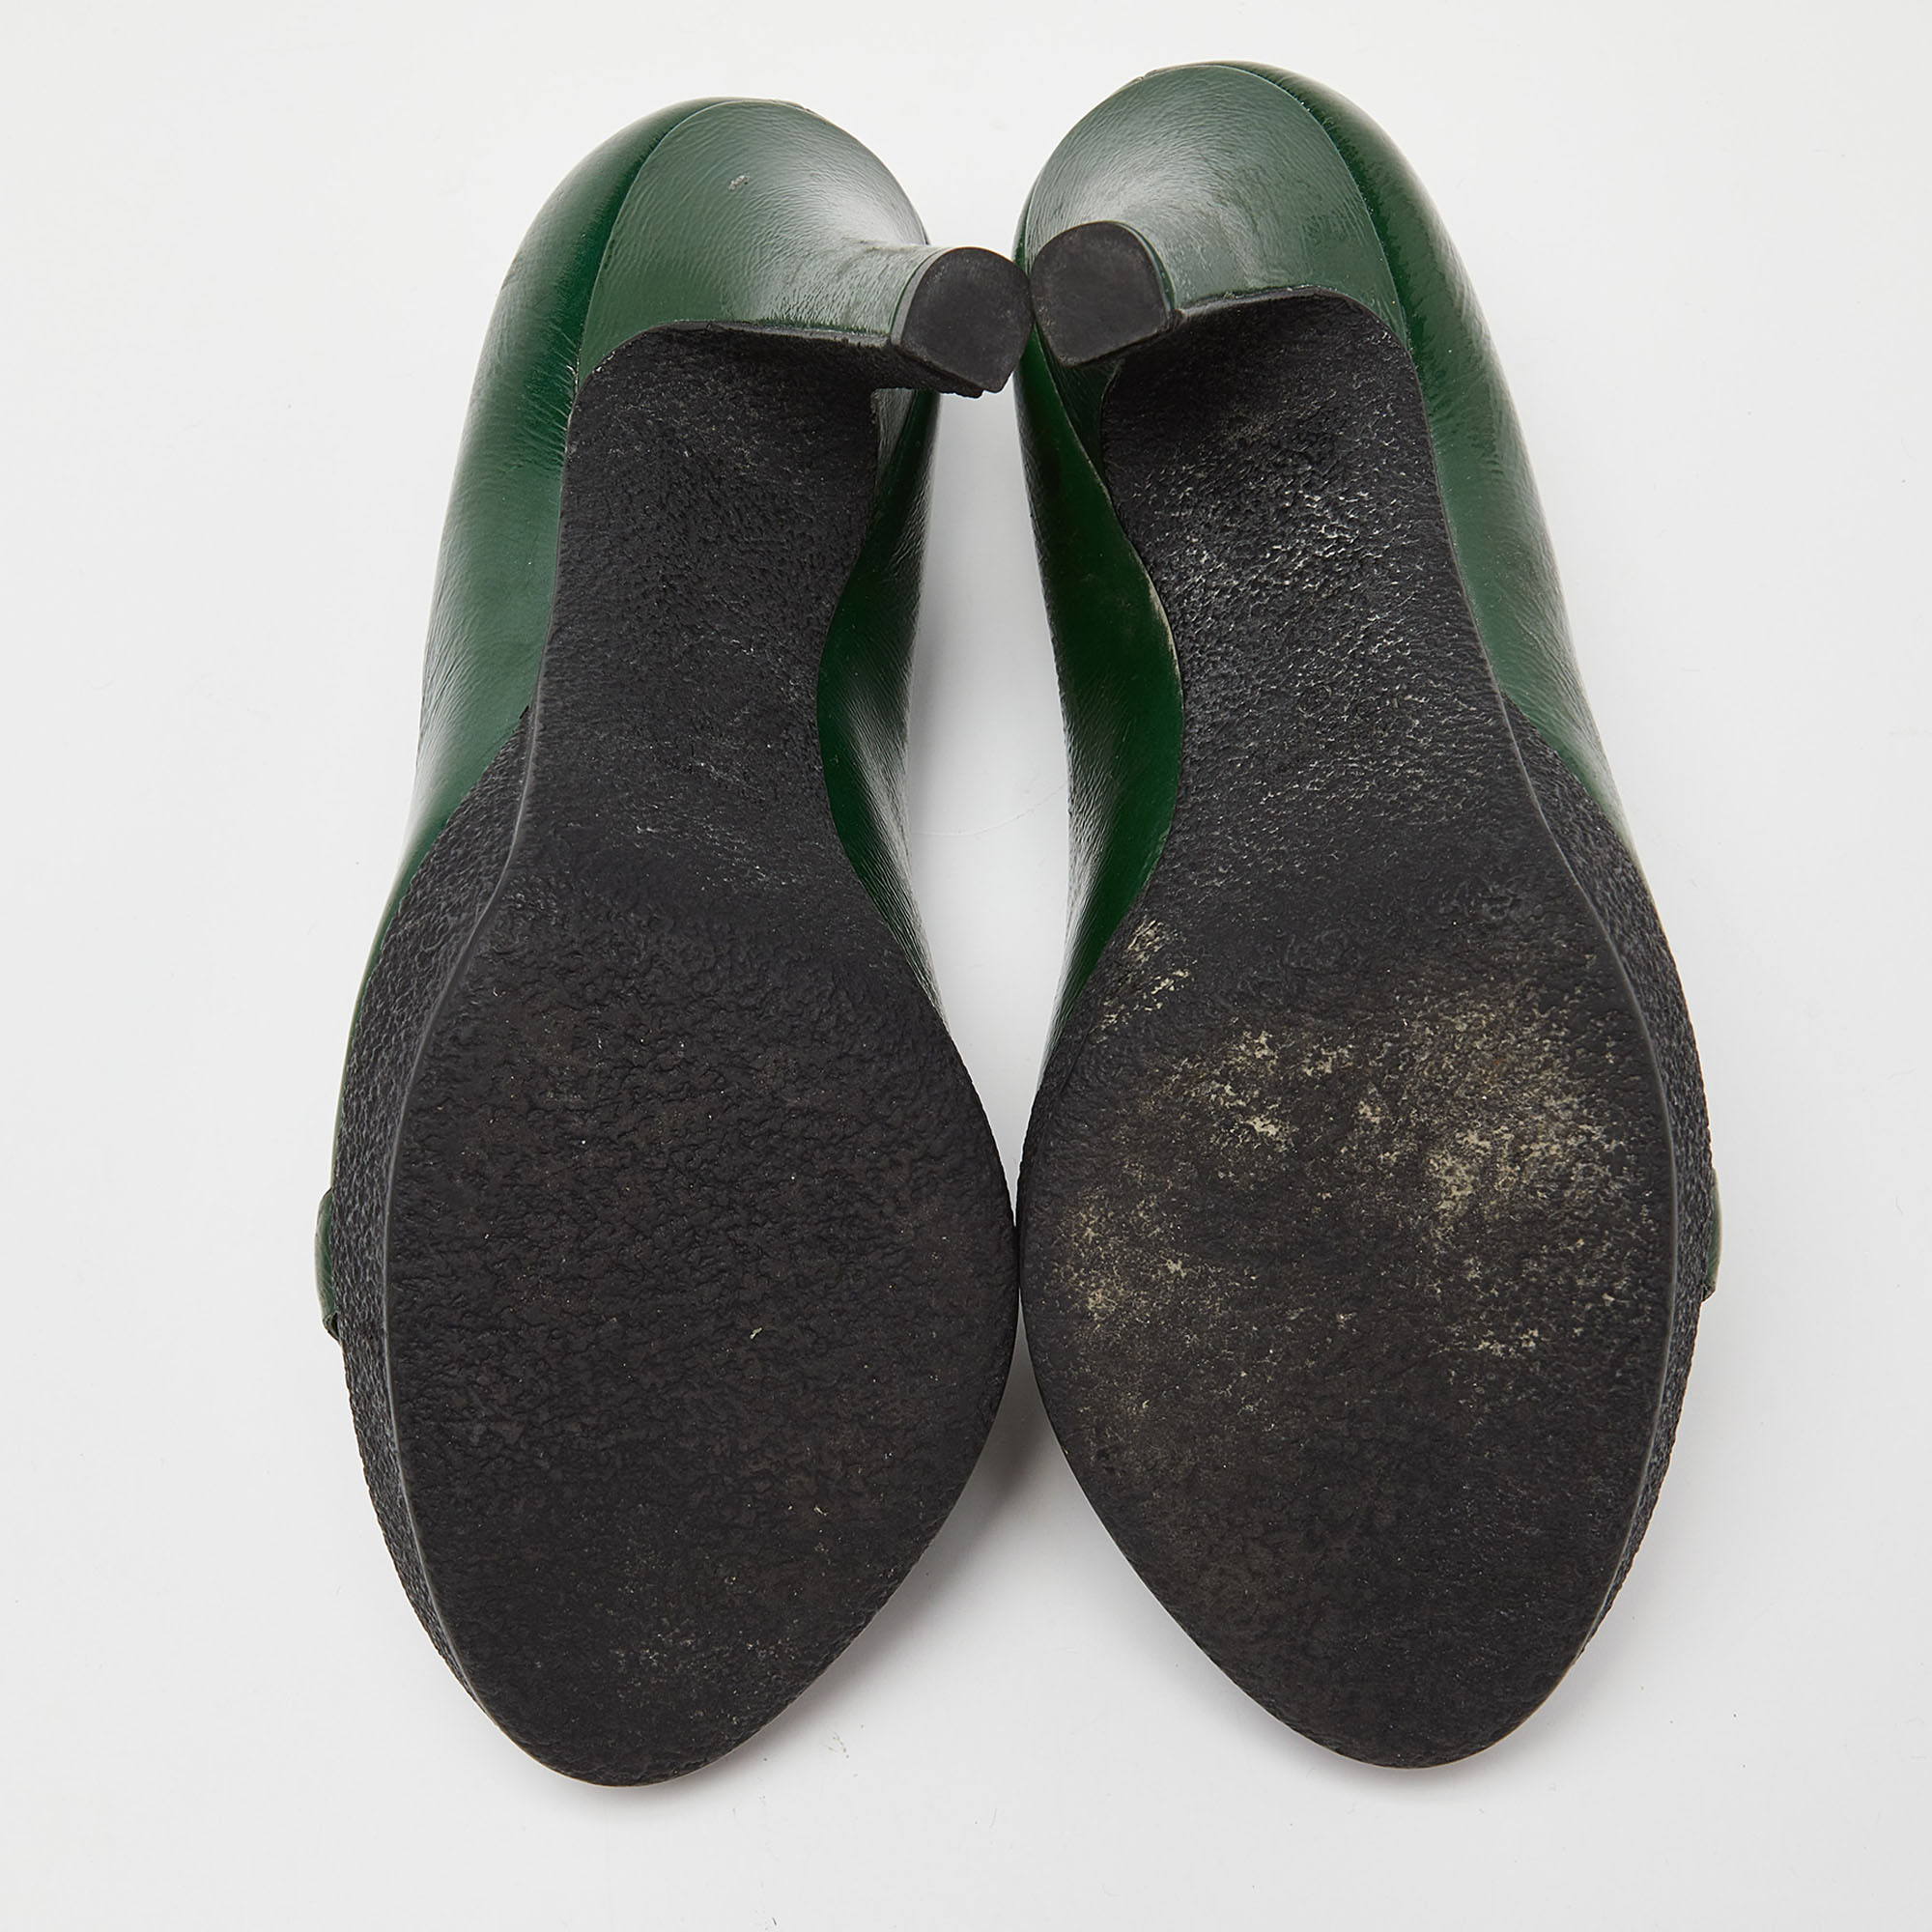 Gucci Green Patent Leather Horsebit Peep Toe Pumps Size 36